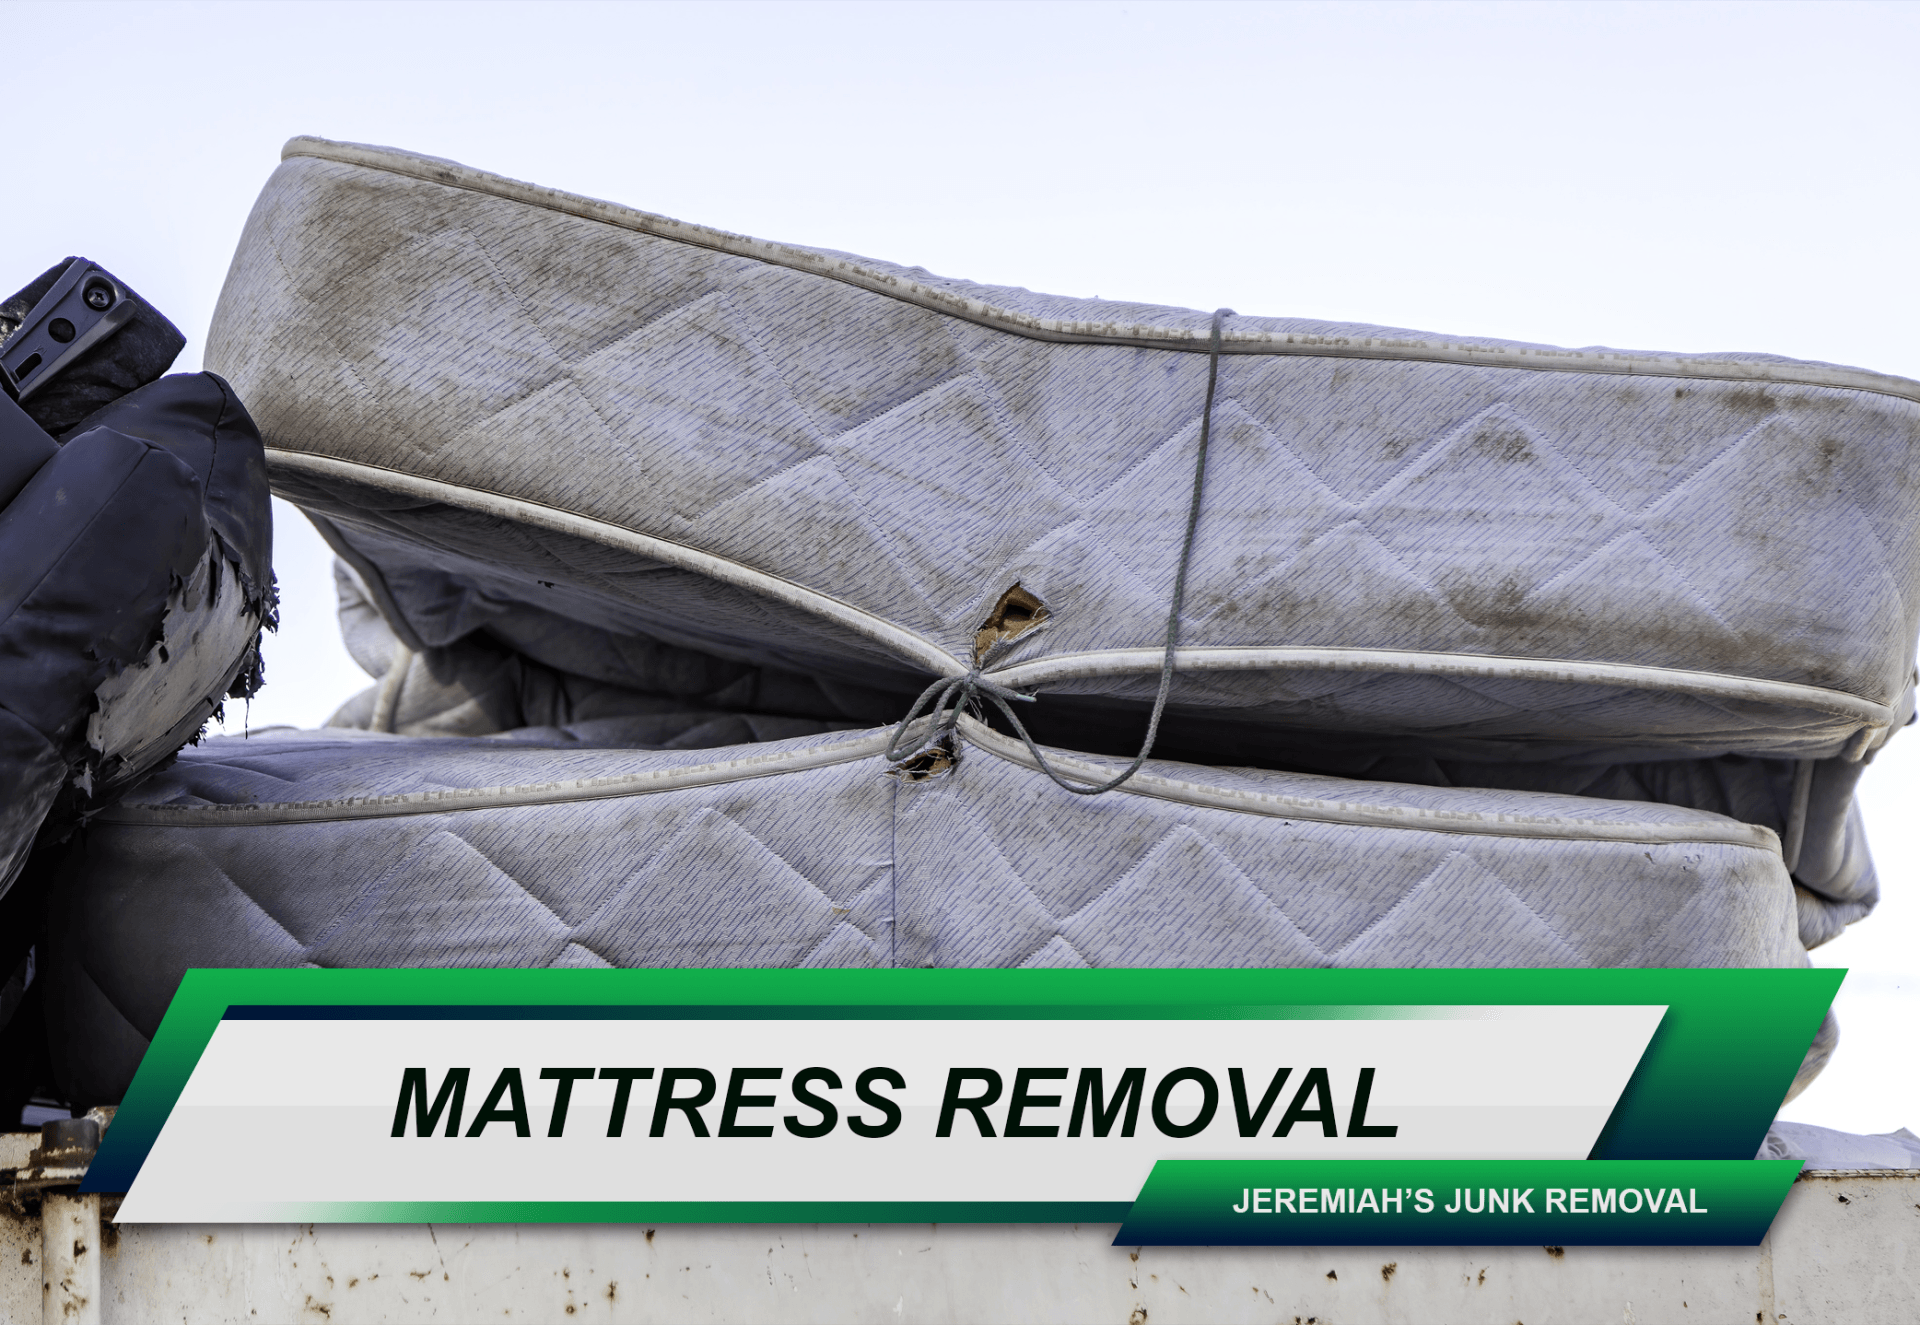 Mattress removal Jamaica